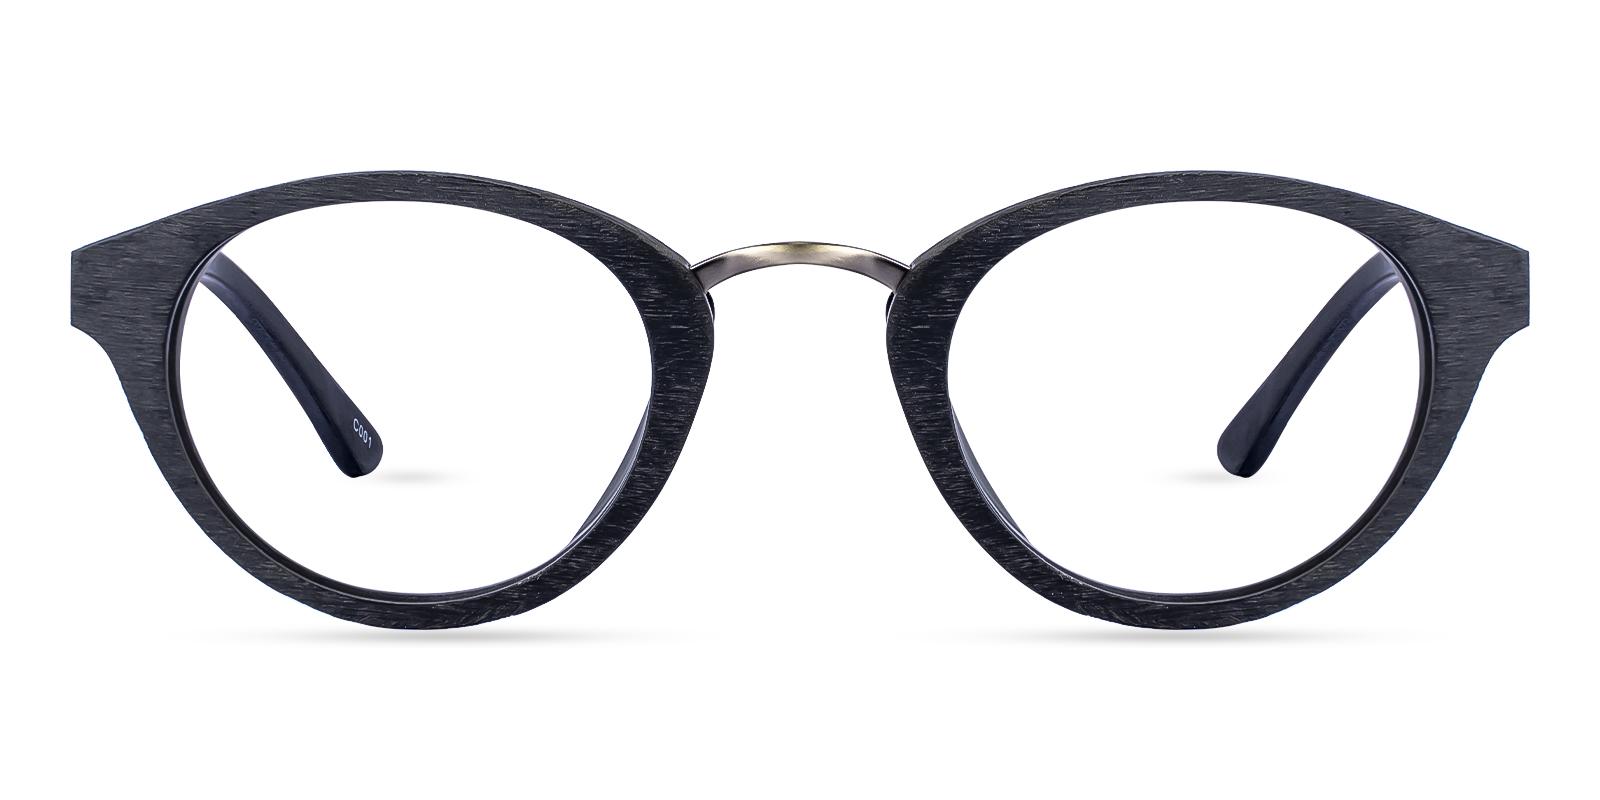 New Haven Black Acetate Eyeglasses , SpringHinges , UniversalBridgeFit Frames from ABBE Glasses